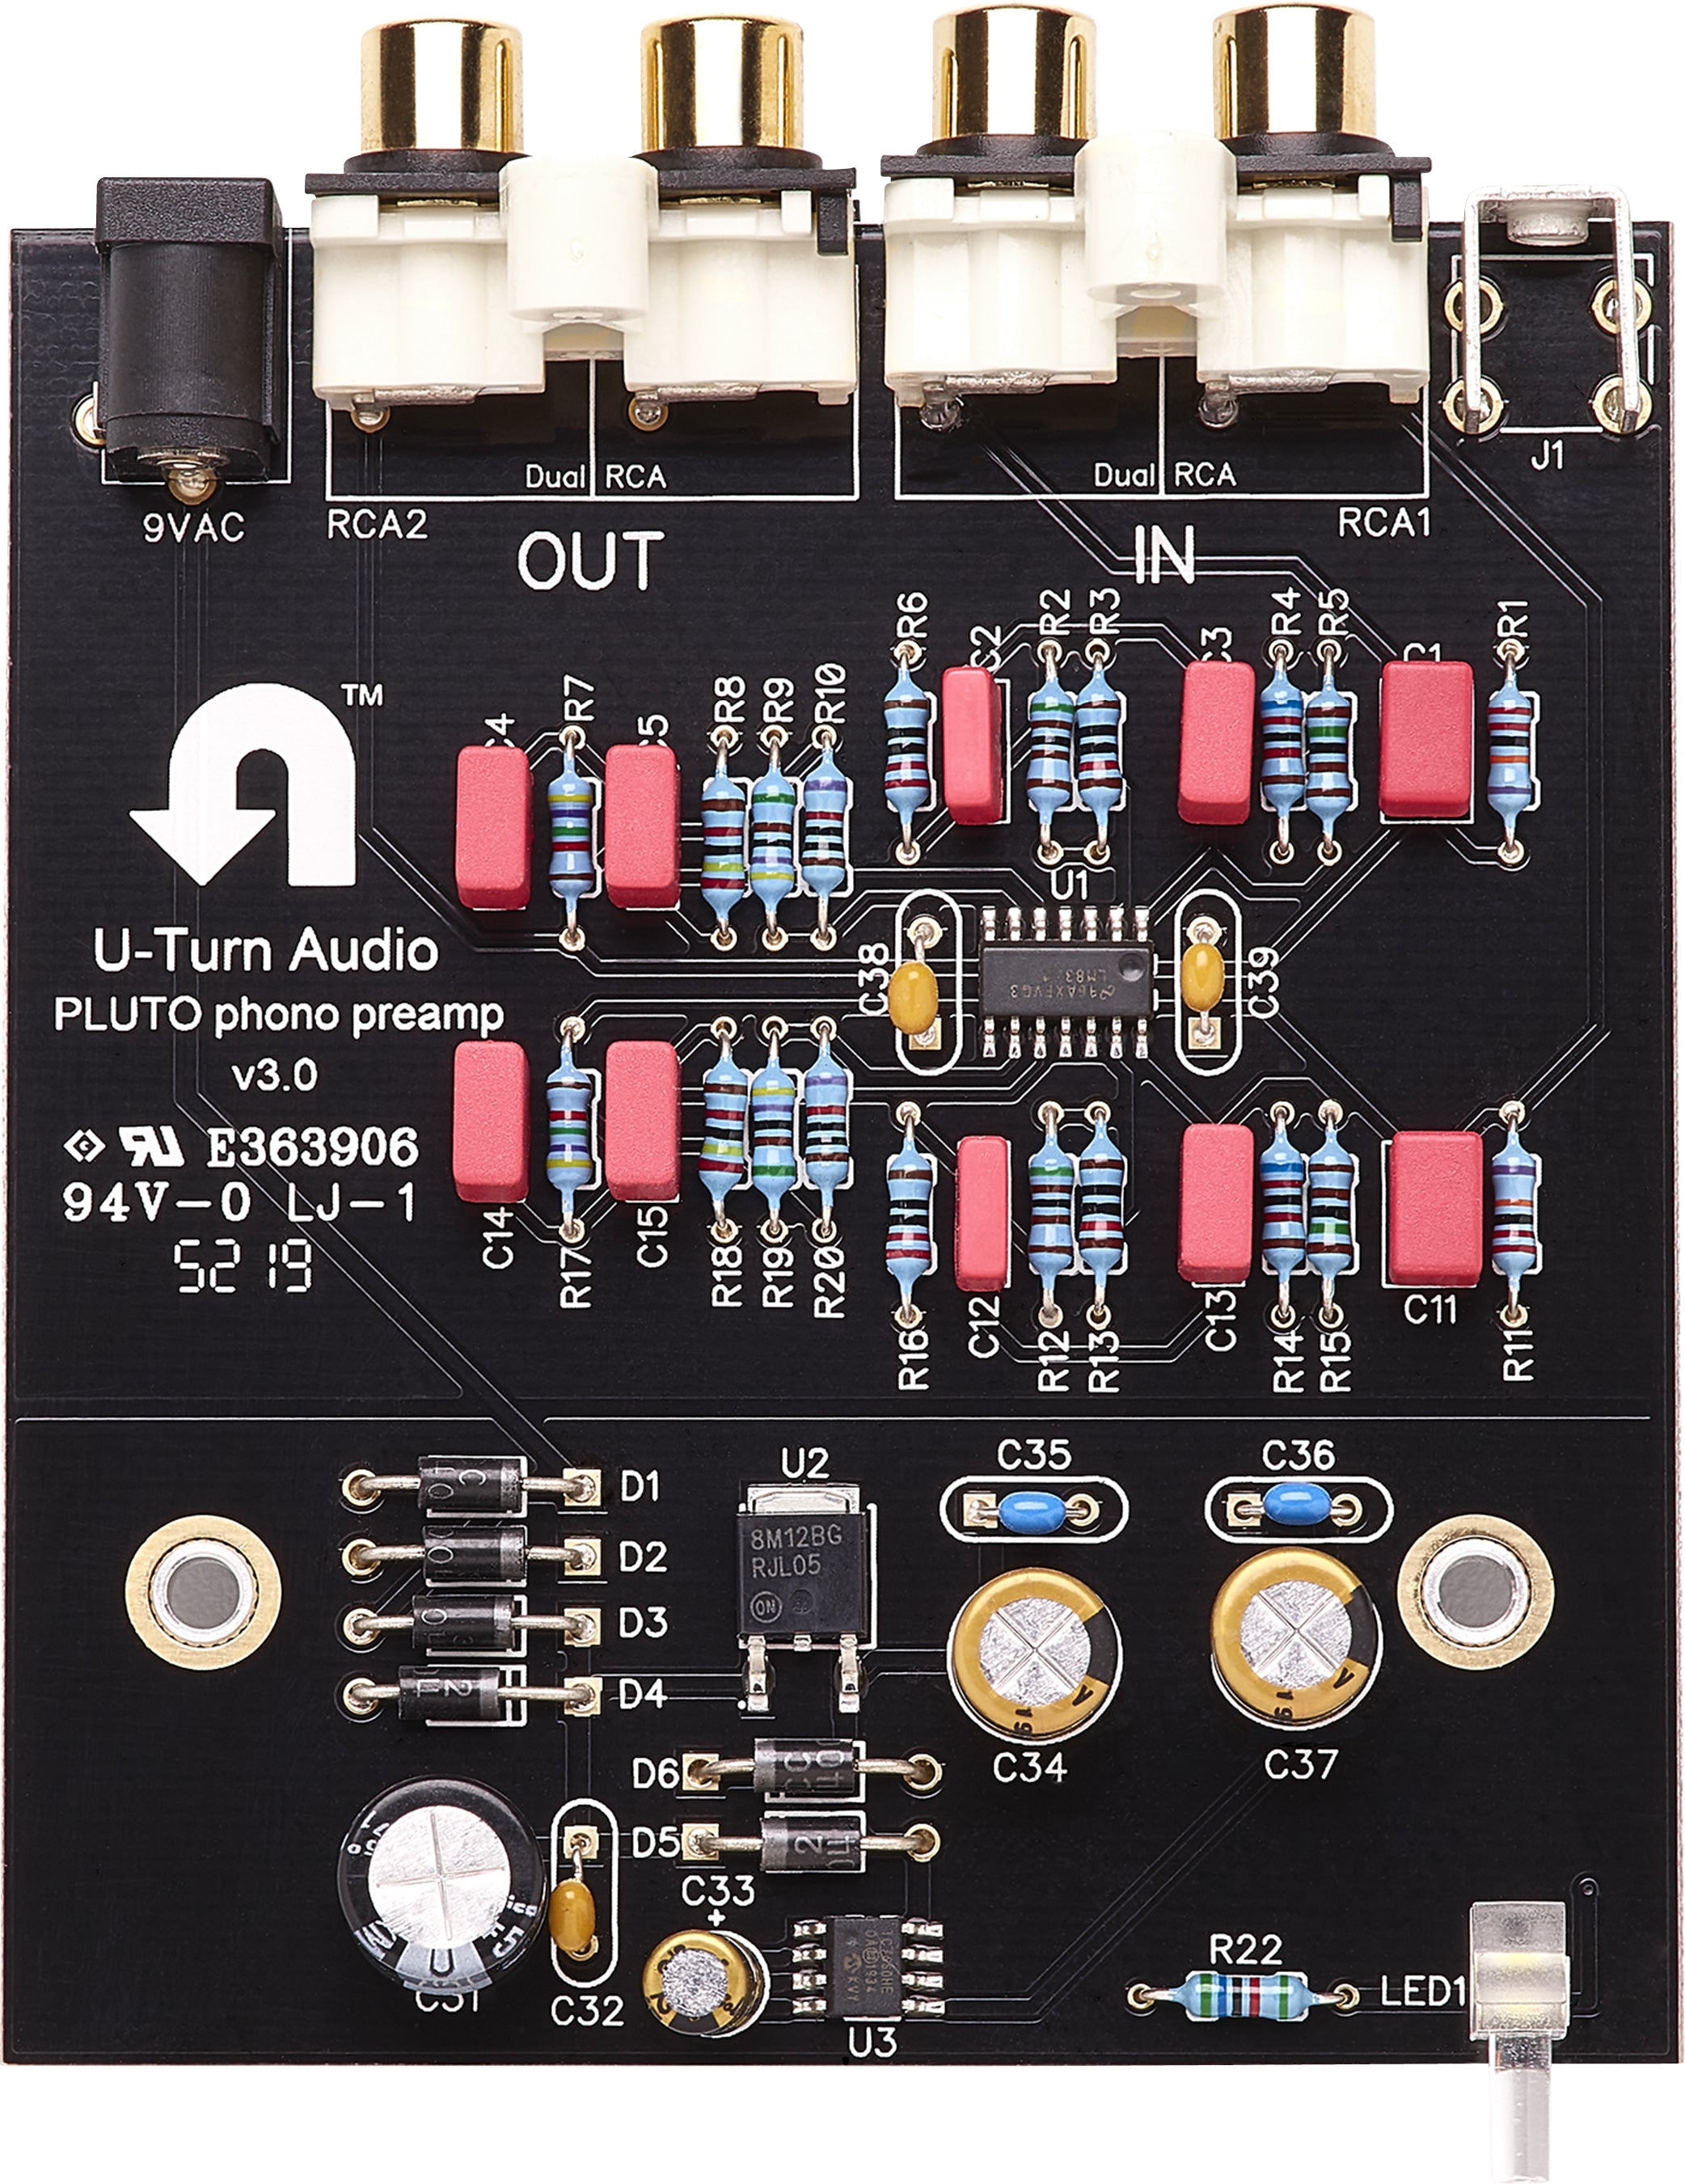 Pluto 2 circuit board